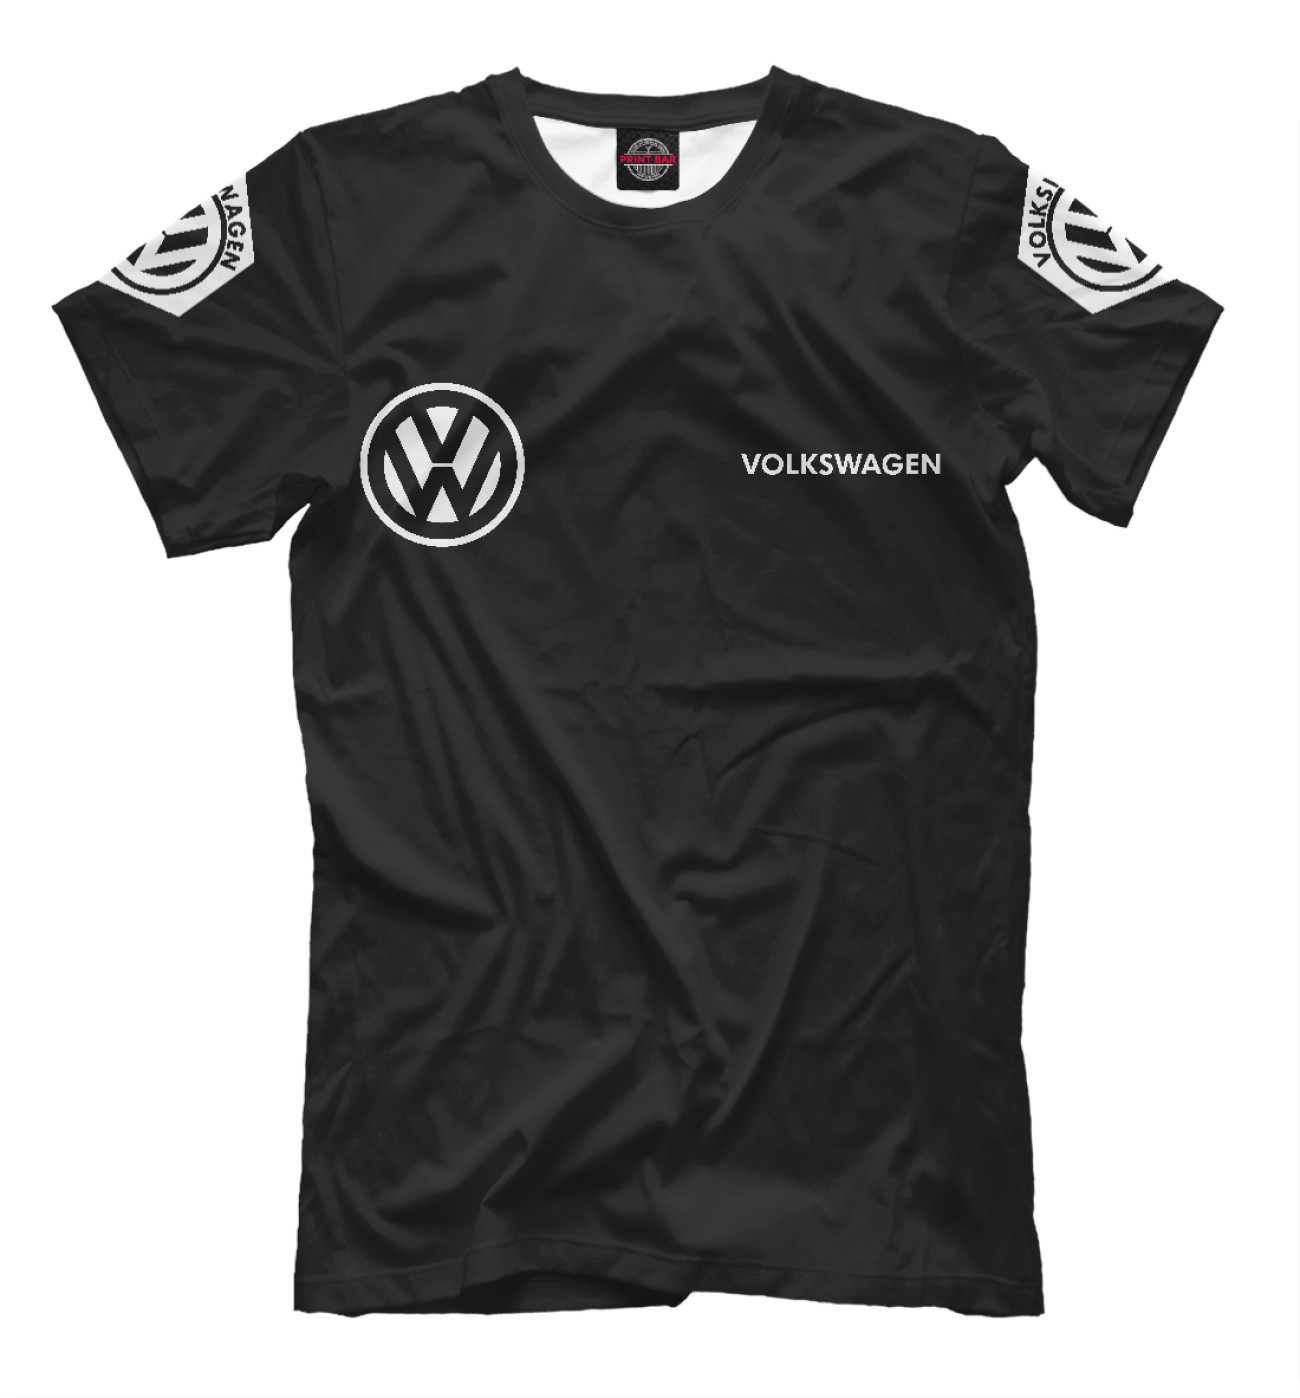 Мужская Футболка Volkswagen, артикул: VWG-566612-fut-2